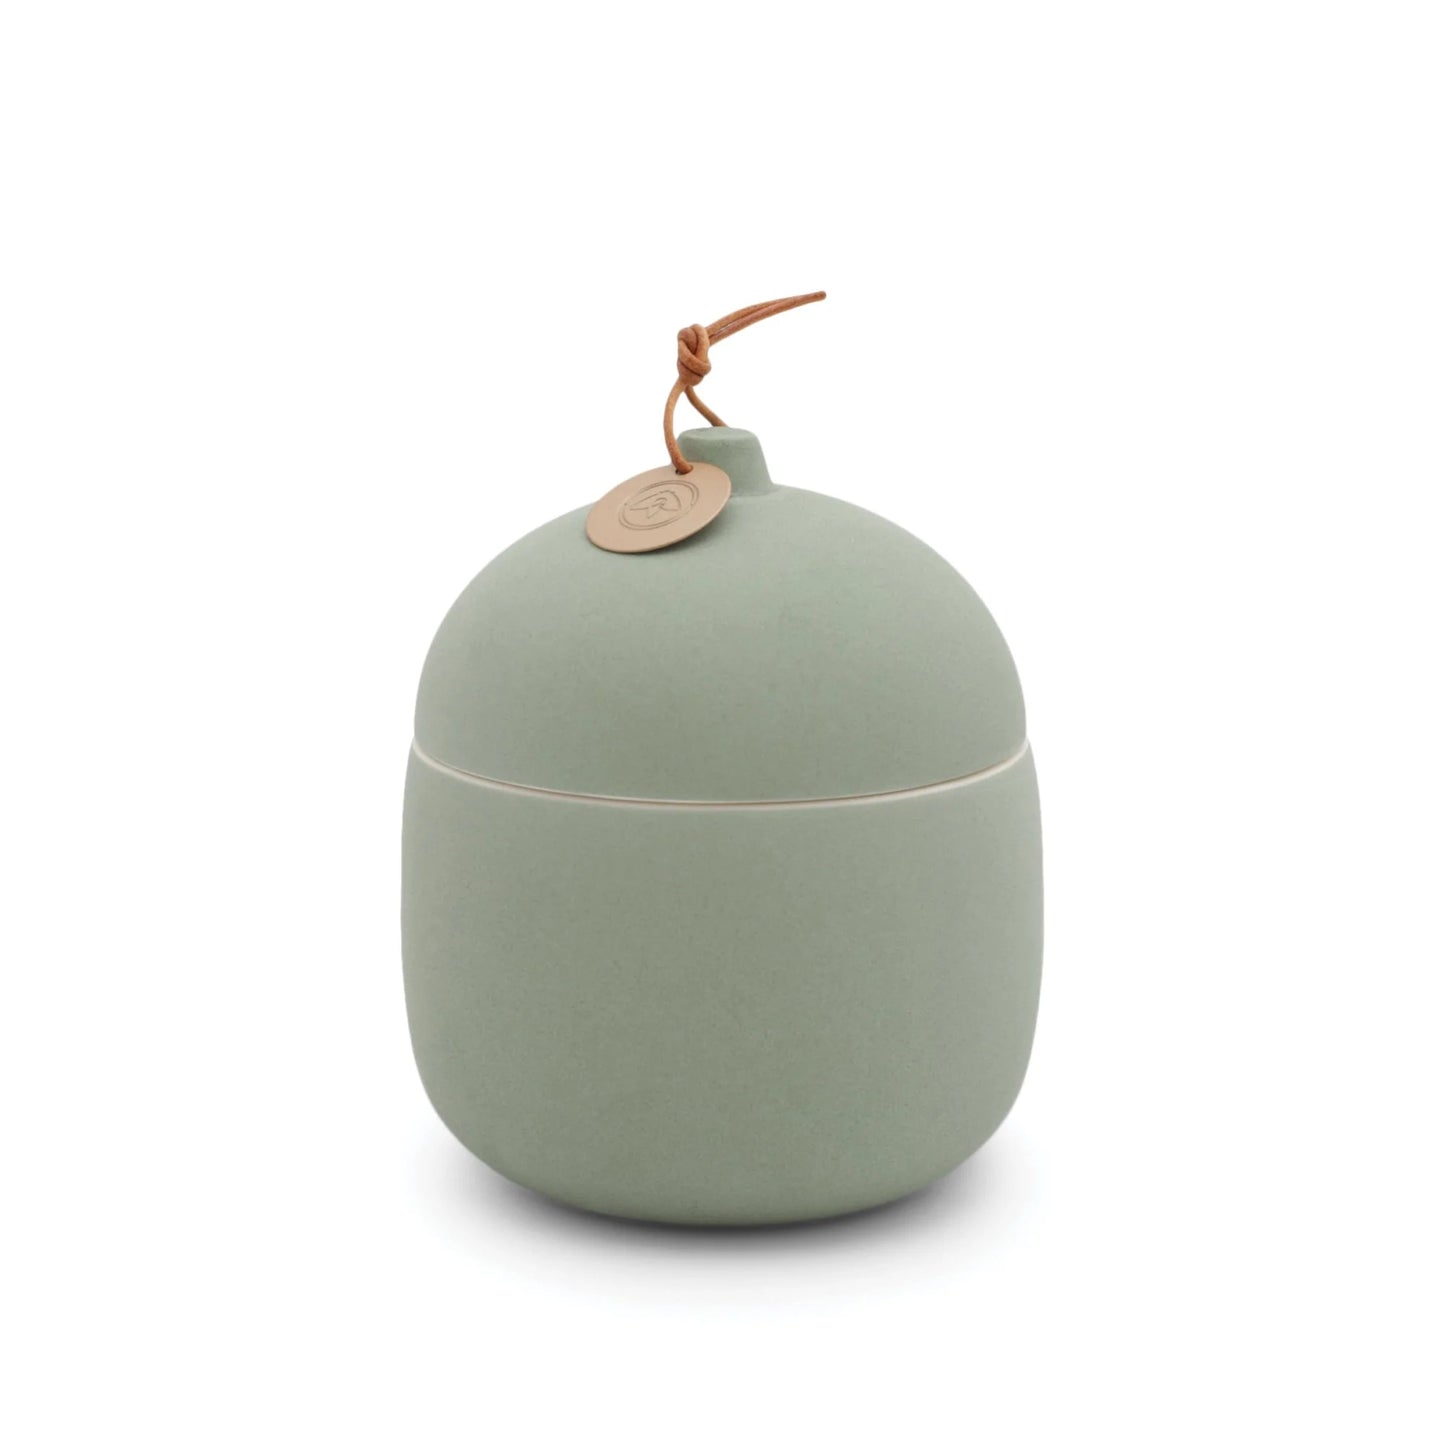 Keepsake 12 oz Candle - Fresh Cut Basil - green colored clay vessel